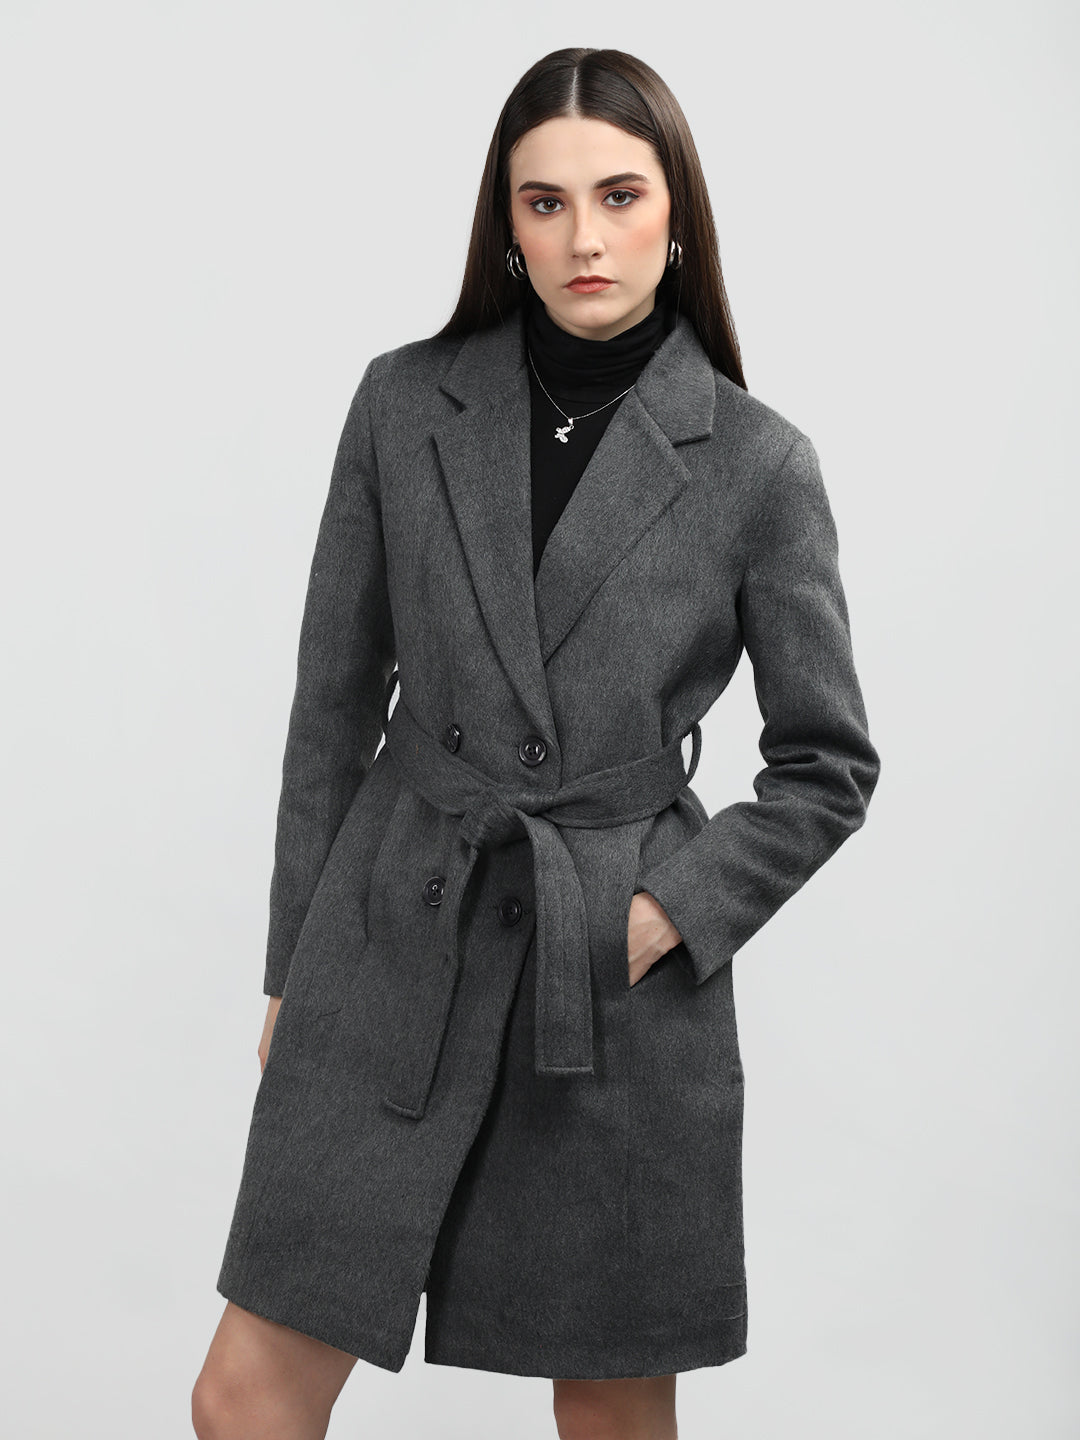 CHKOKKO Women Winter Wear Stylish Coat